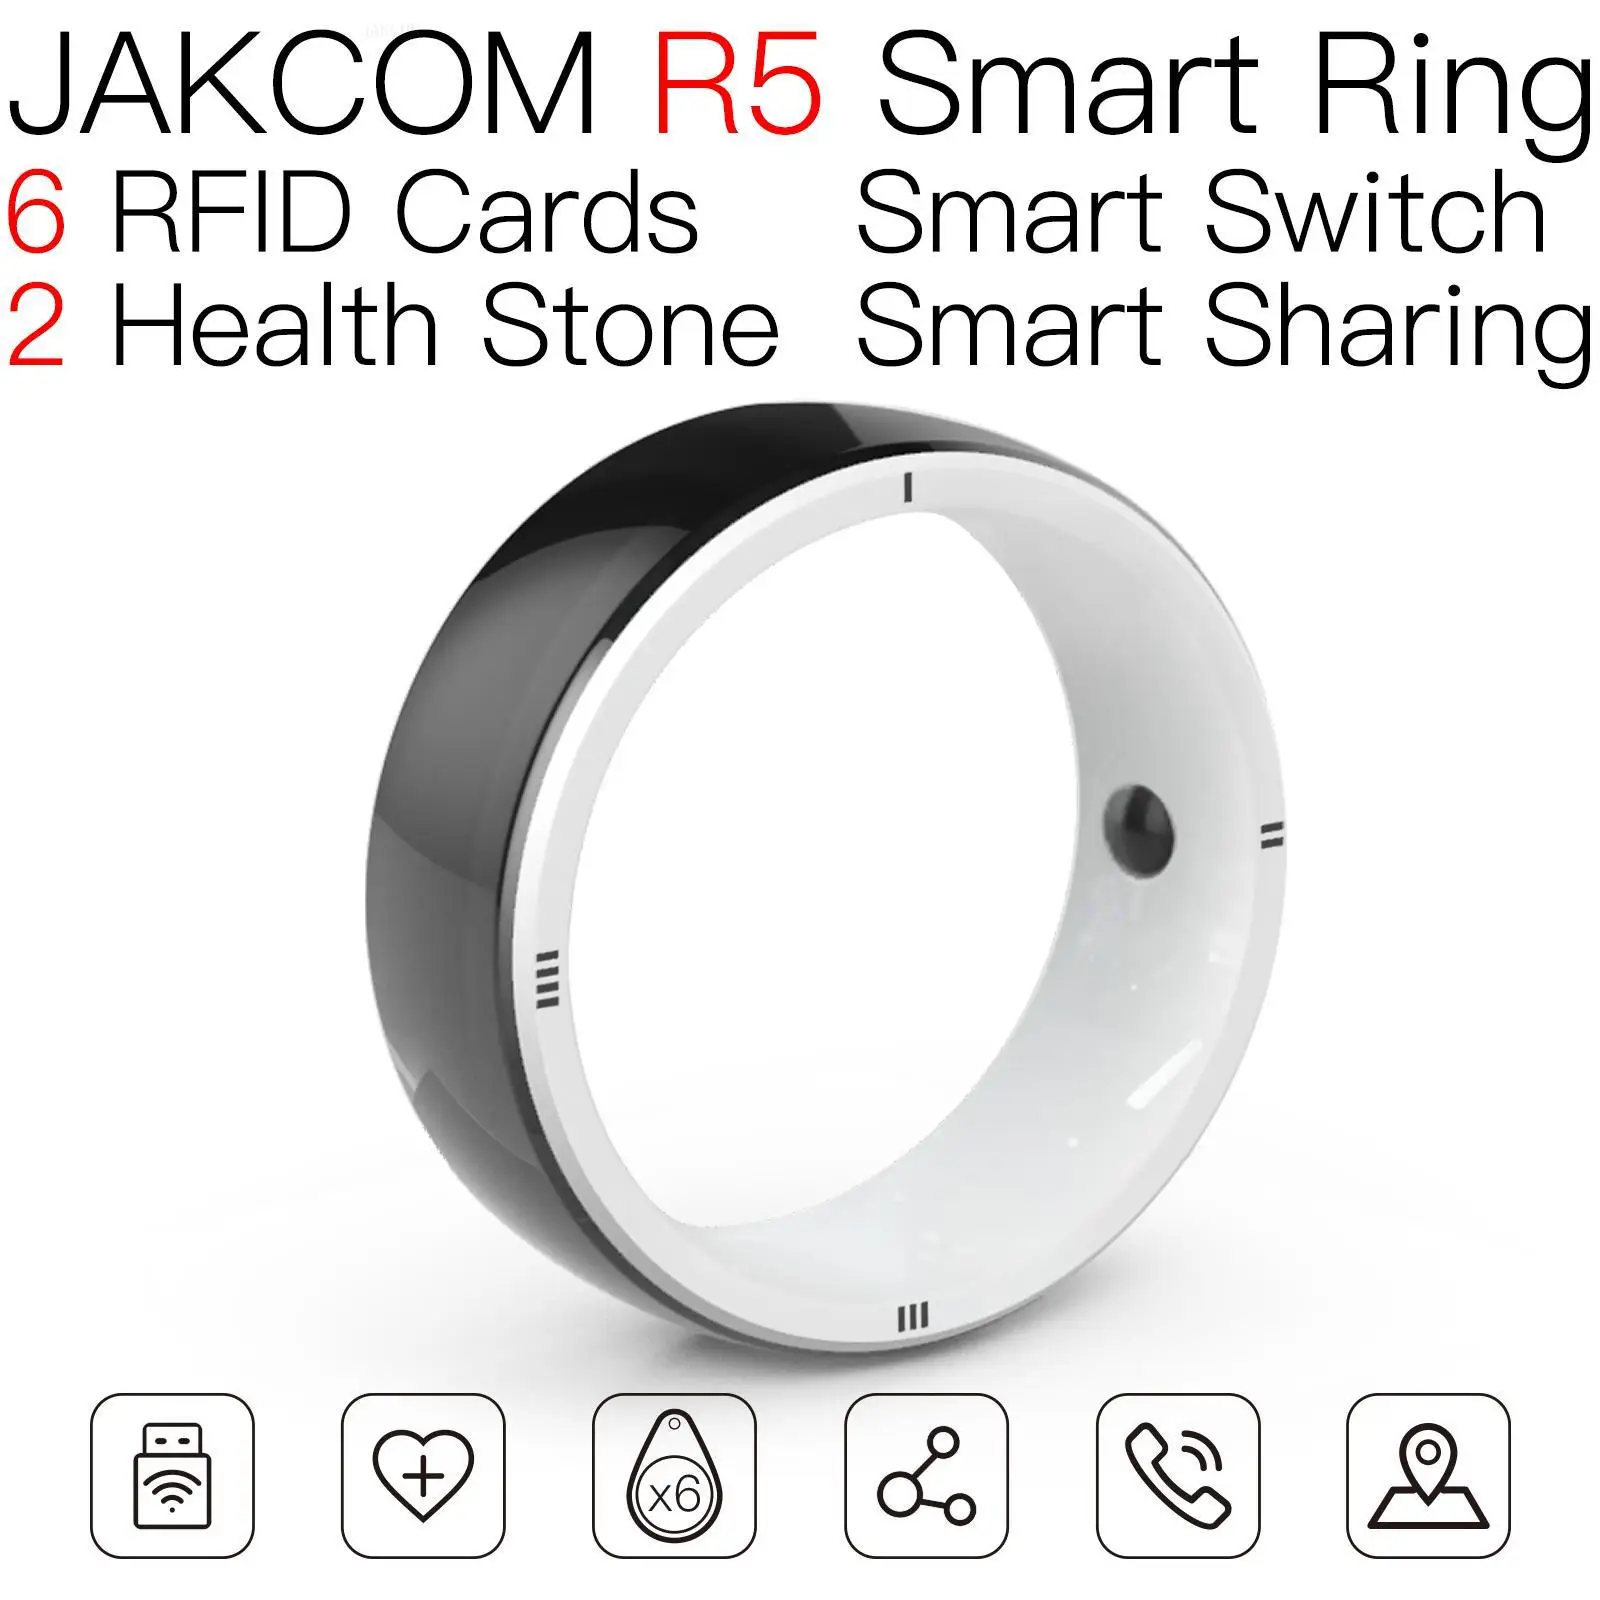 

JAKCOM R5 Smart Ring Match to carte new horizon 73 transponder microchip dog prodecoder cover waterproof 125khz rfid card